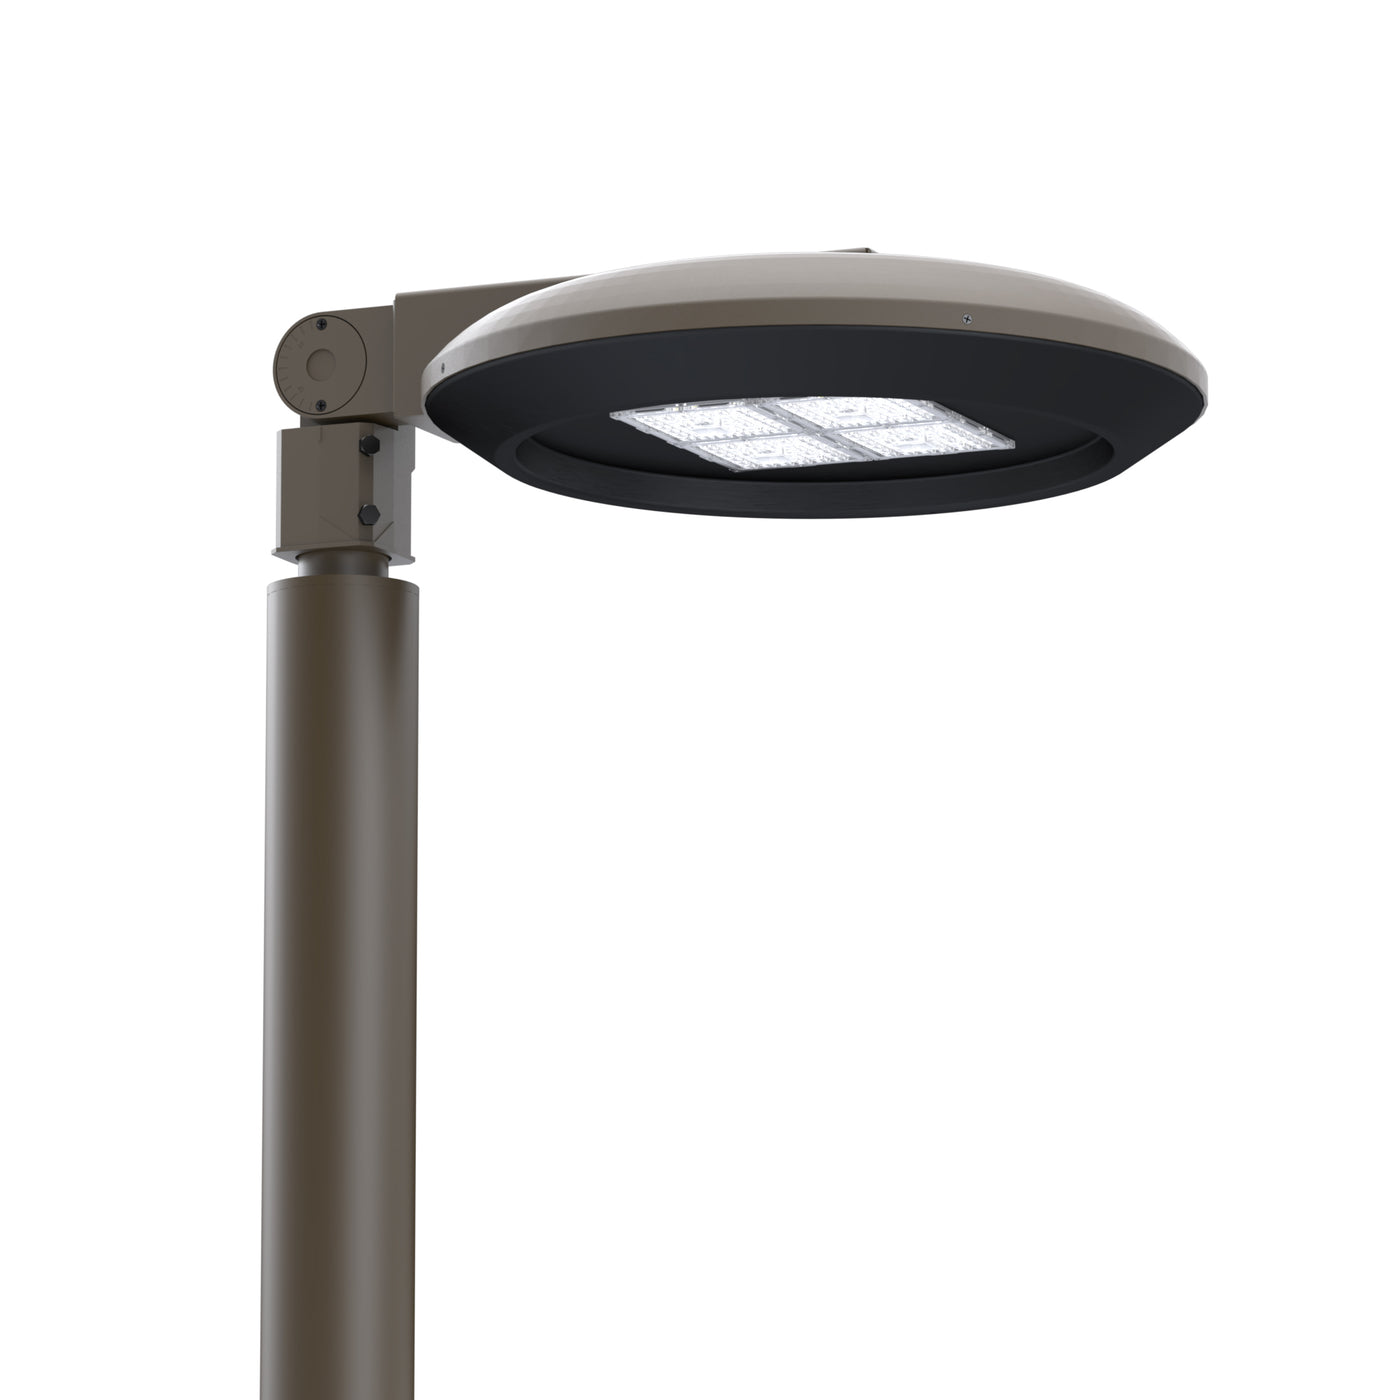 WiLLstudio DRX Area LED Light Fixture with slipfitter mount